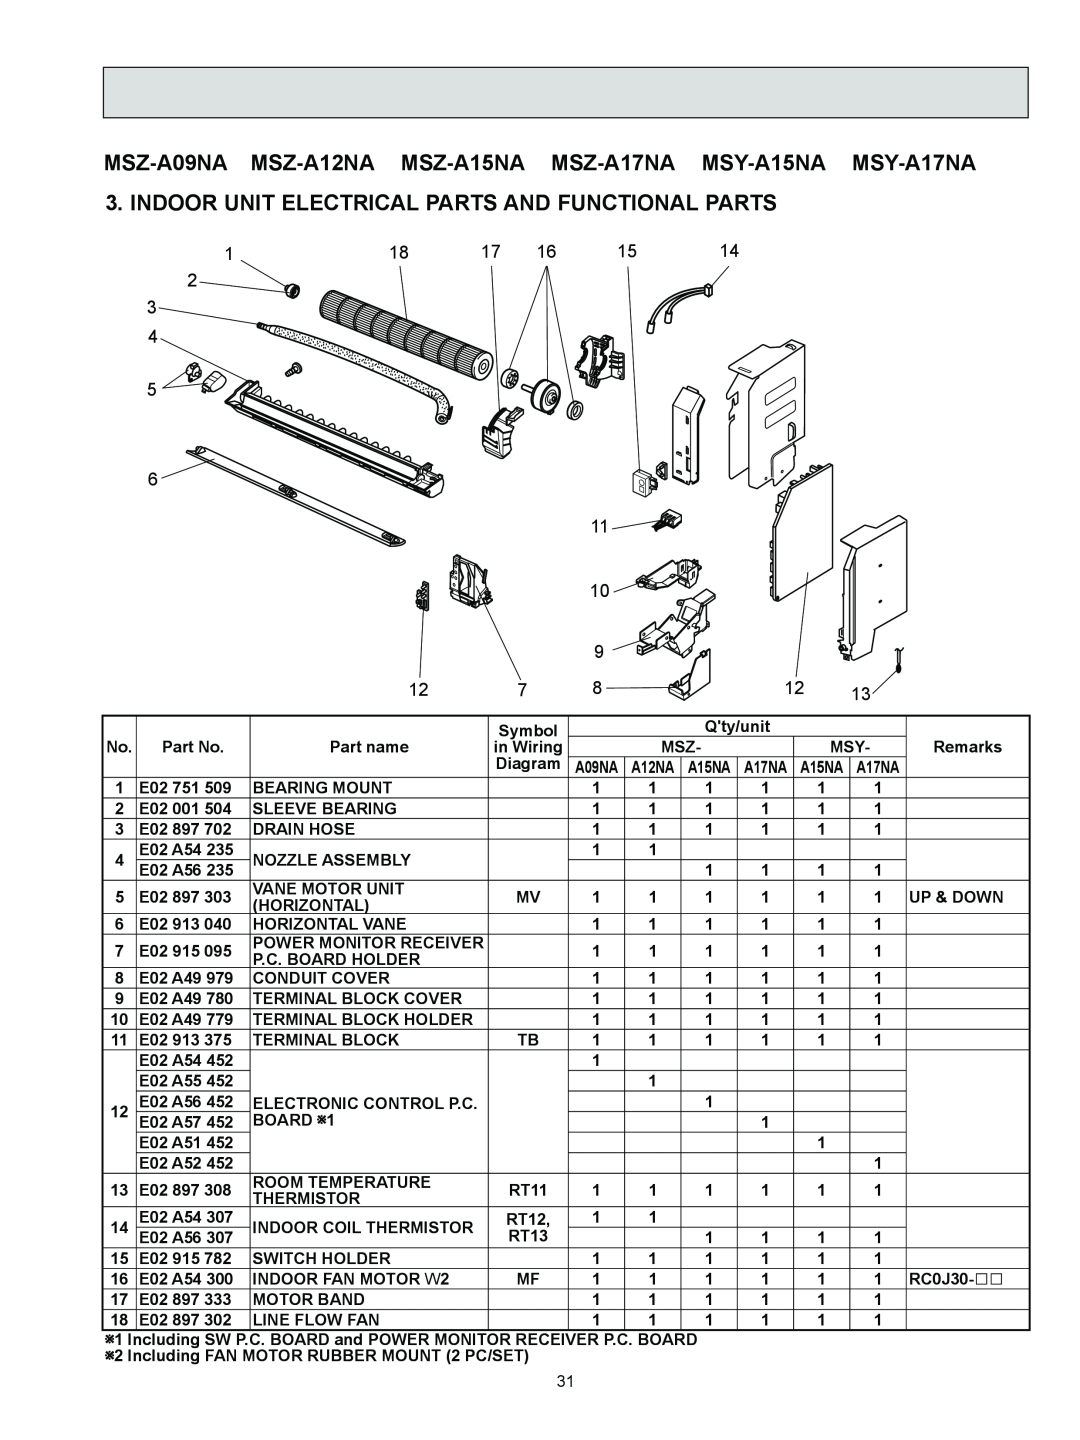 Logitech MSZ-A09NA, OB450 REVISED EDITION-B service manual 